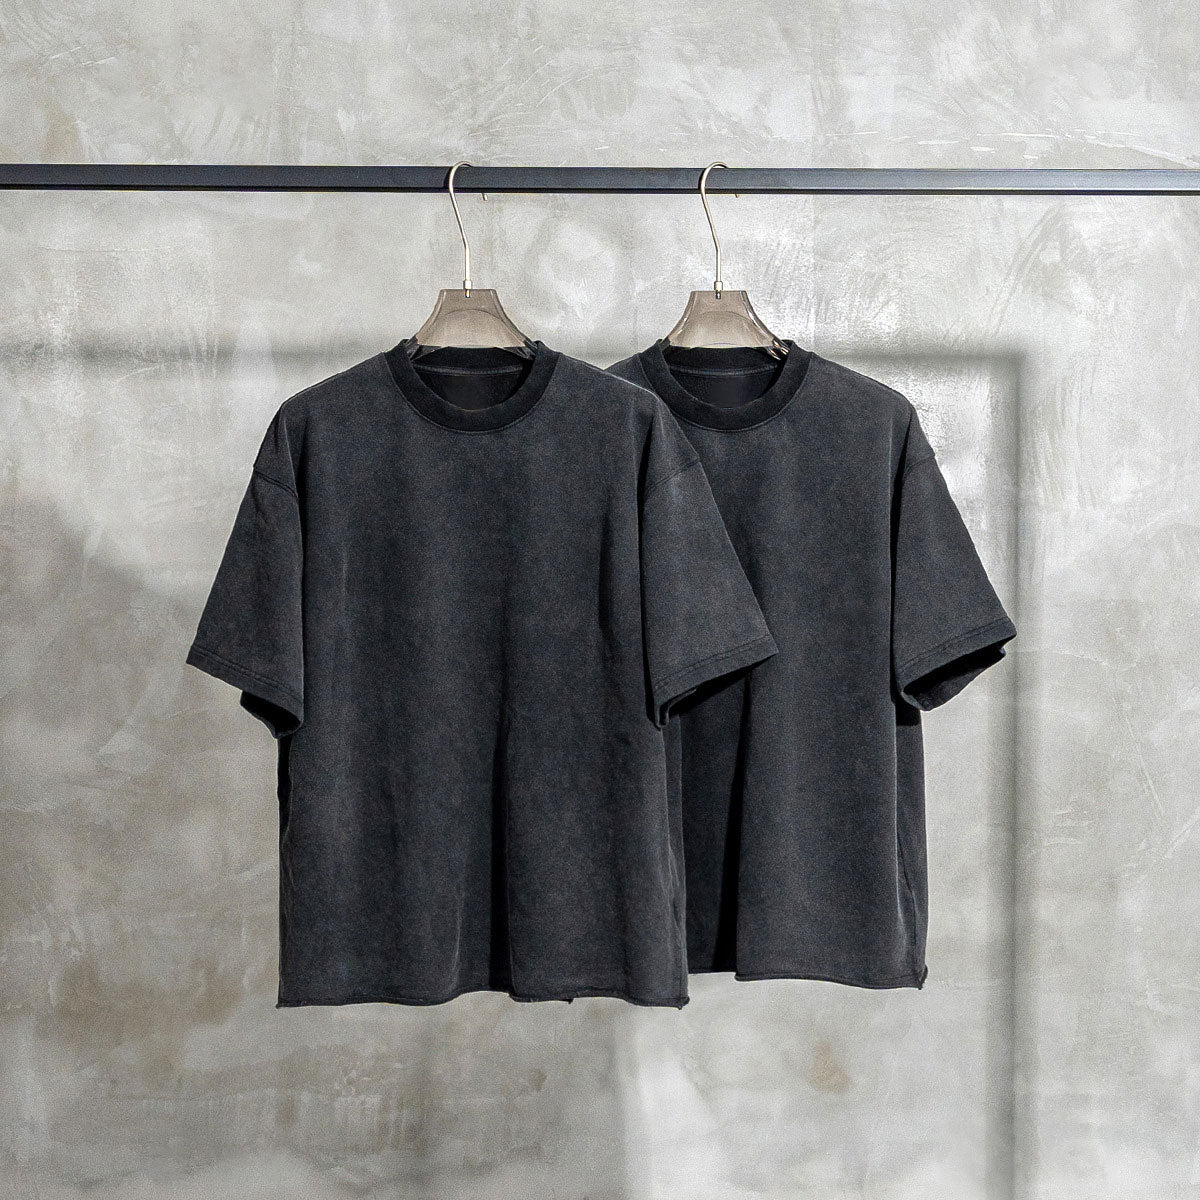 Huili manufacturer American heavy wash to do old round neck short sleeve T-shirt men high street fashion brand large size men's wear